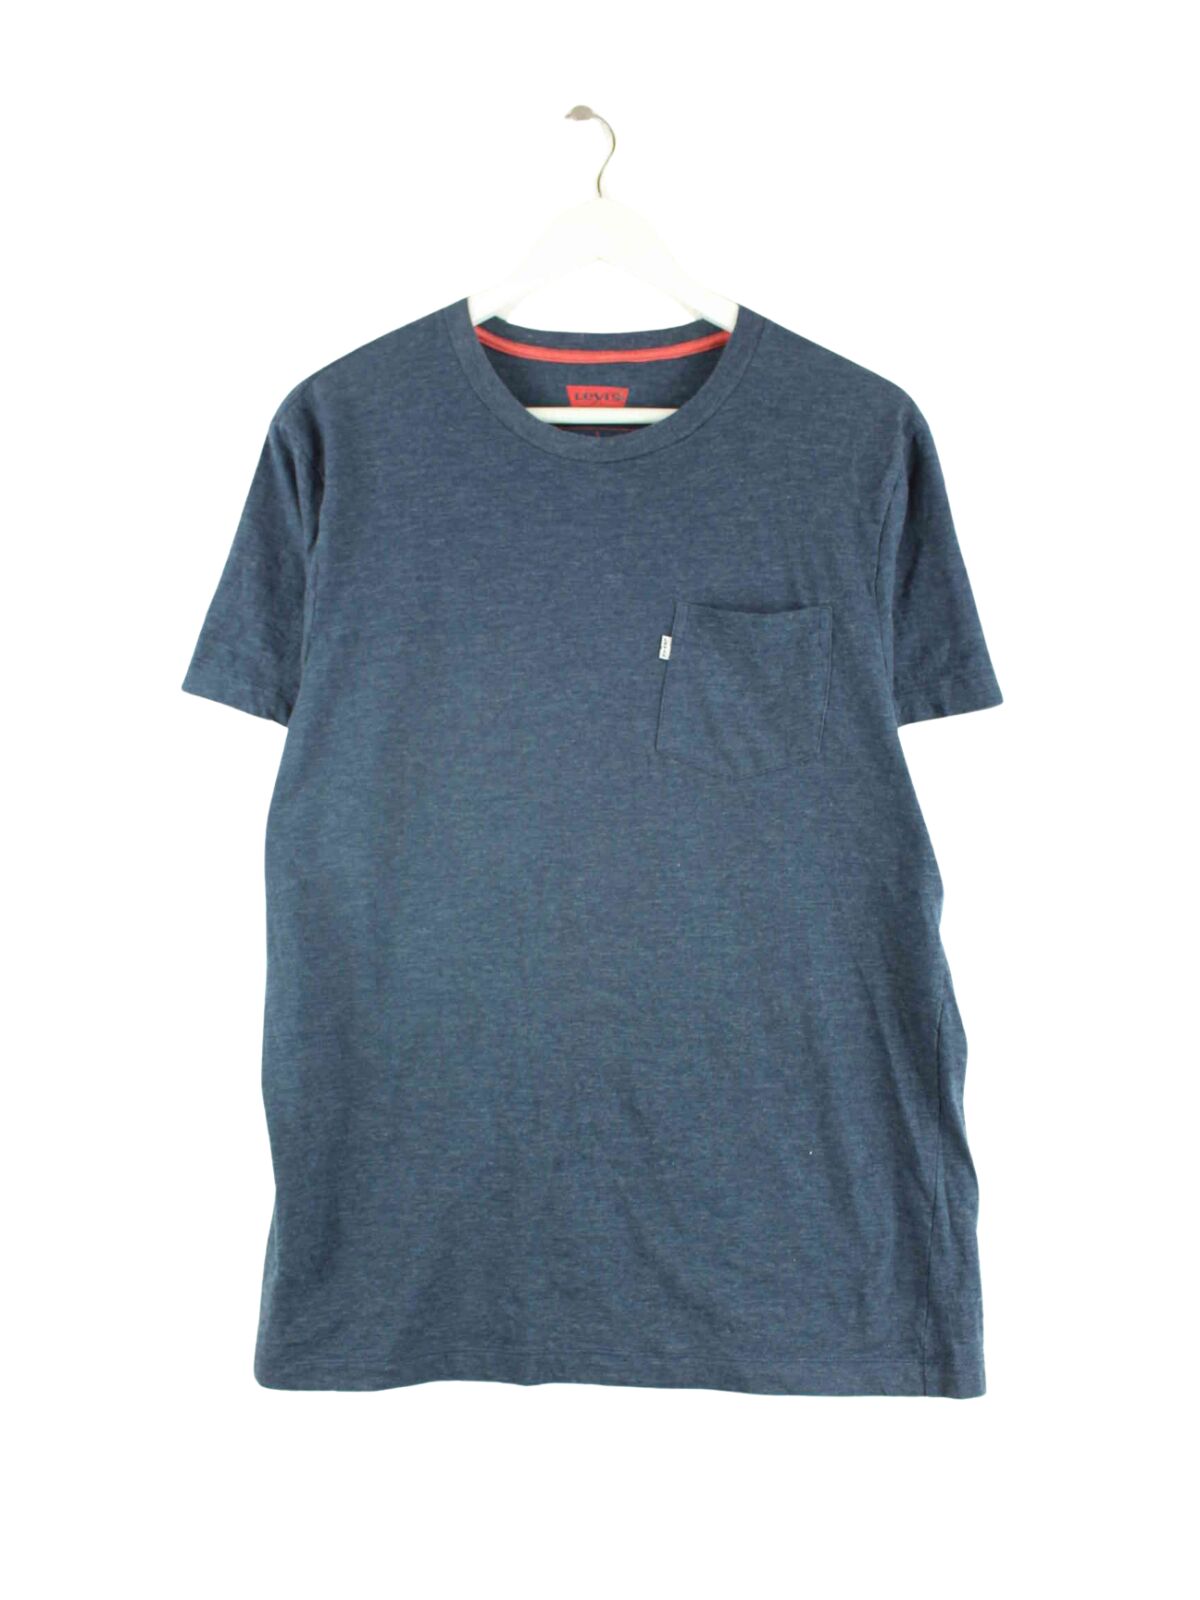 Levi's Basic T-Shirt Blau L (front image)